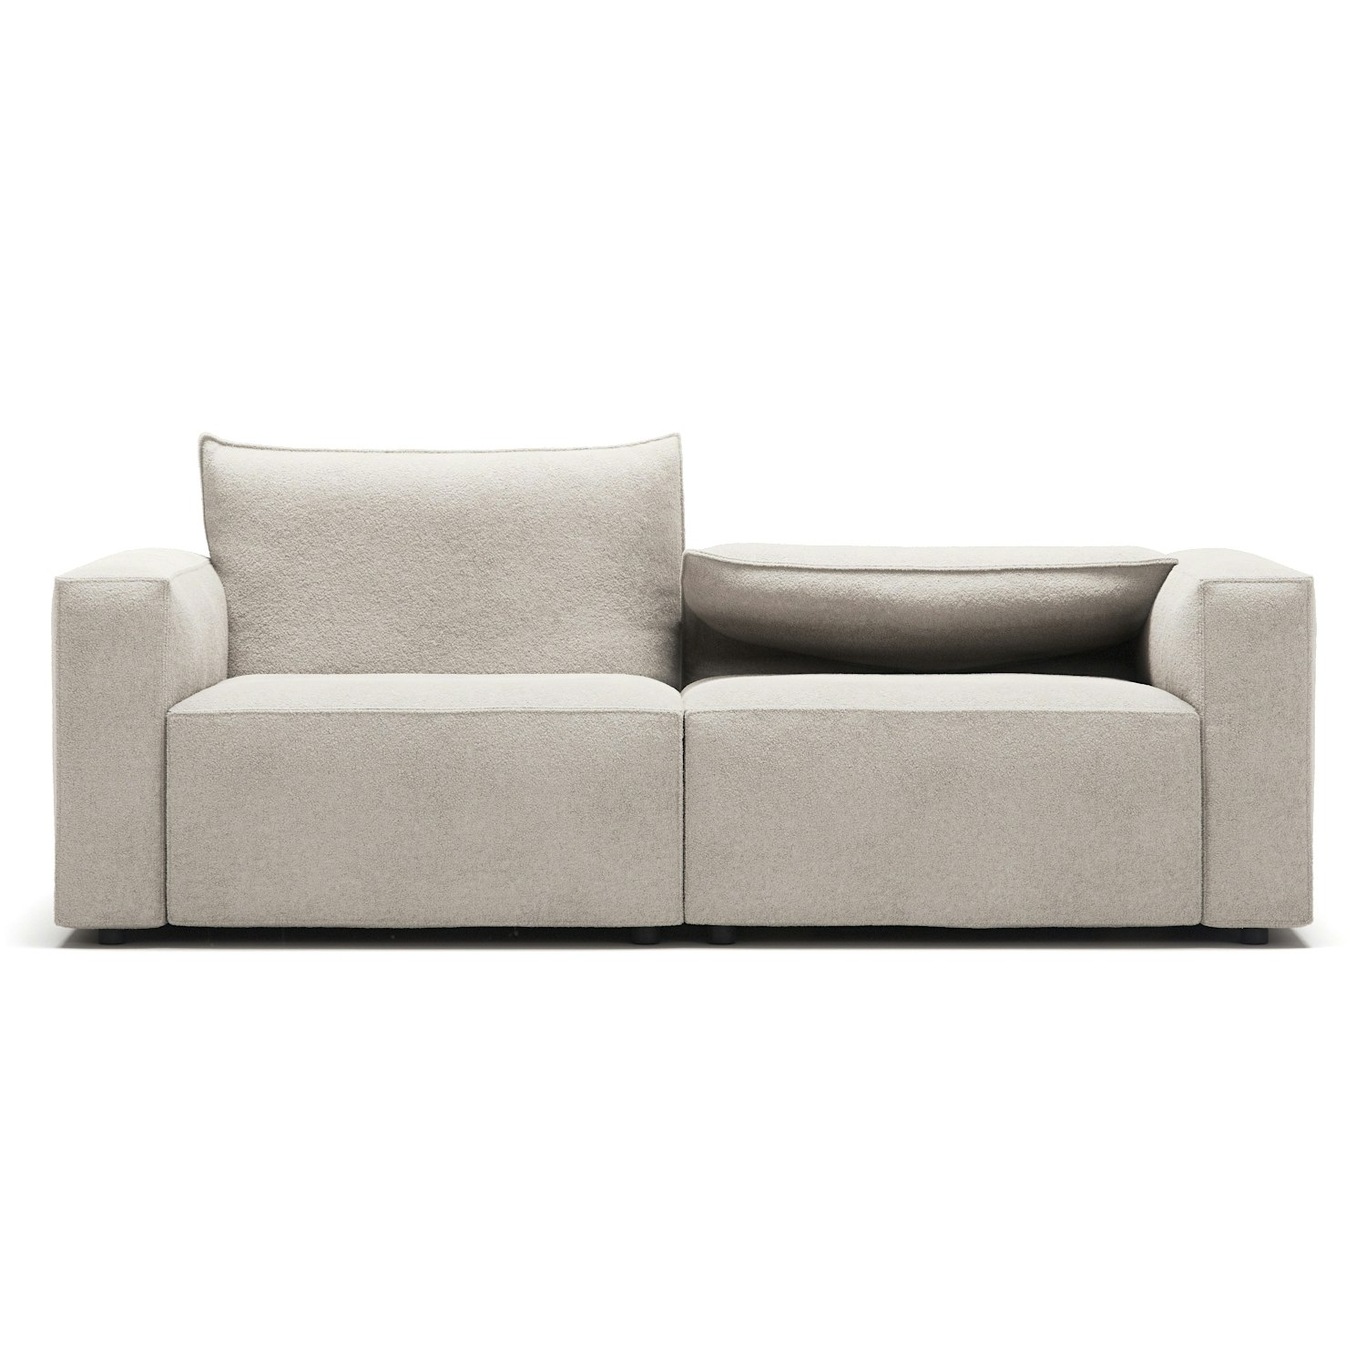 Moore 2-Seter Sofa, Plush Beige